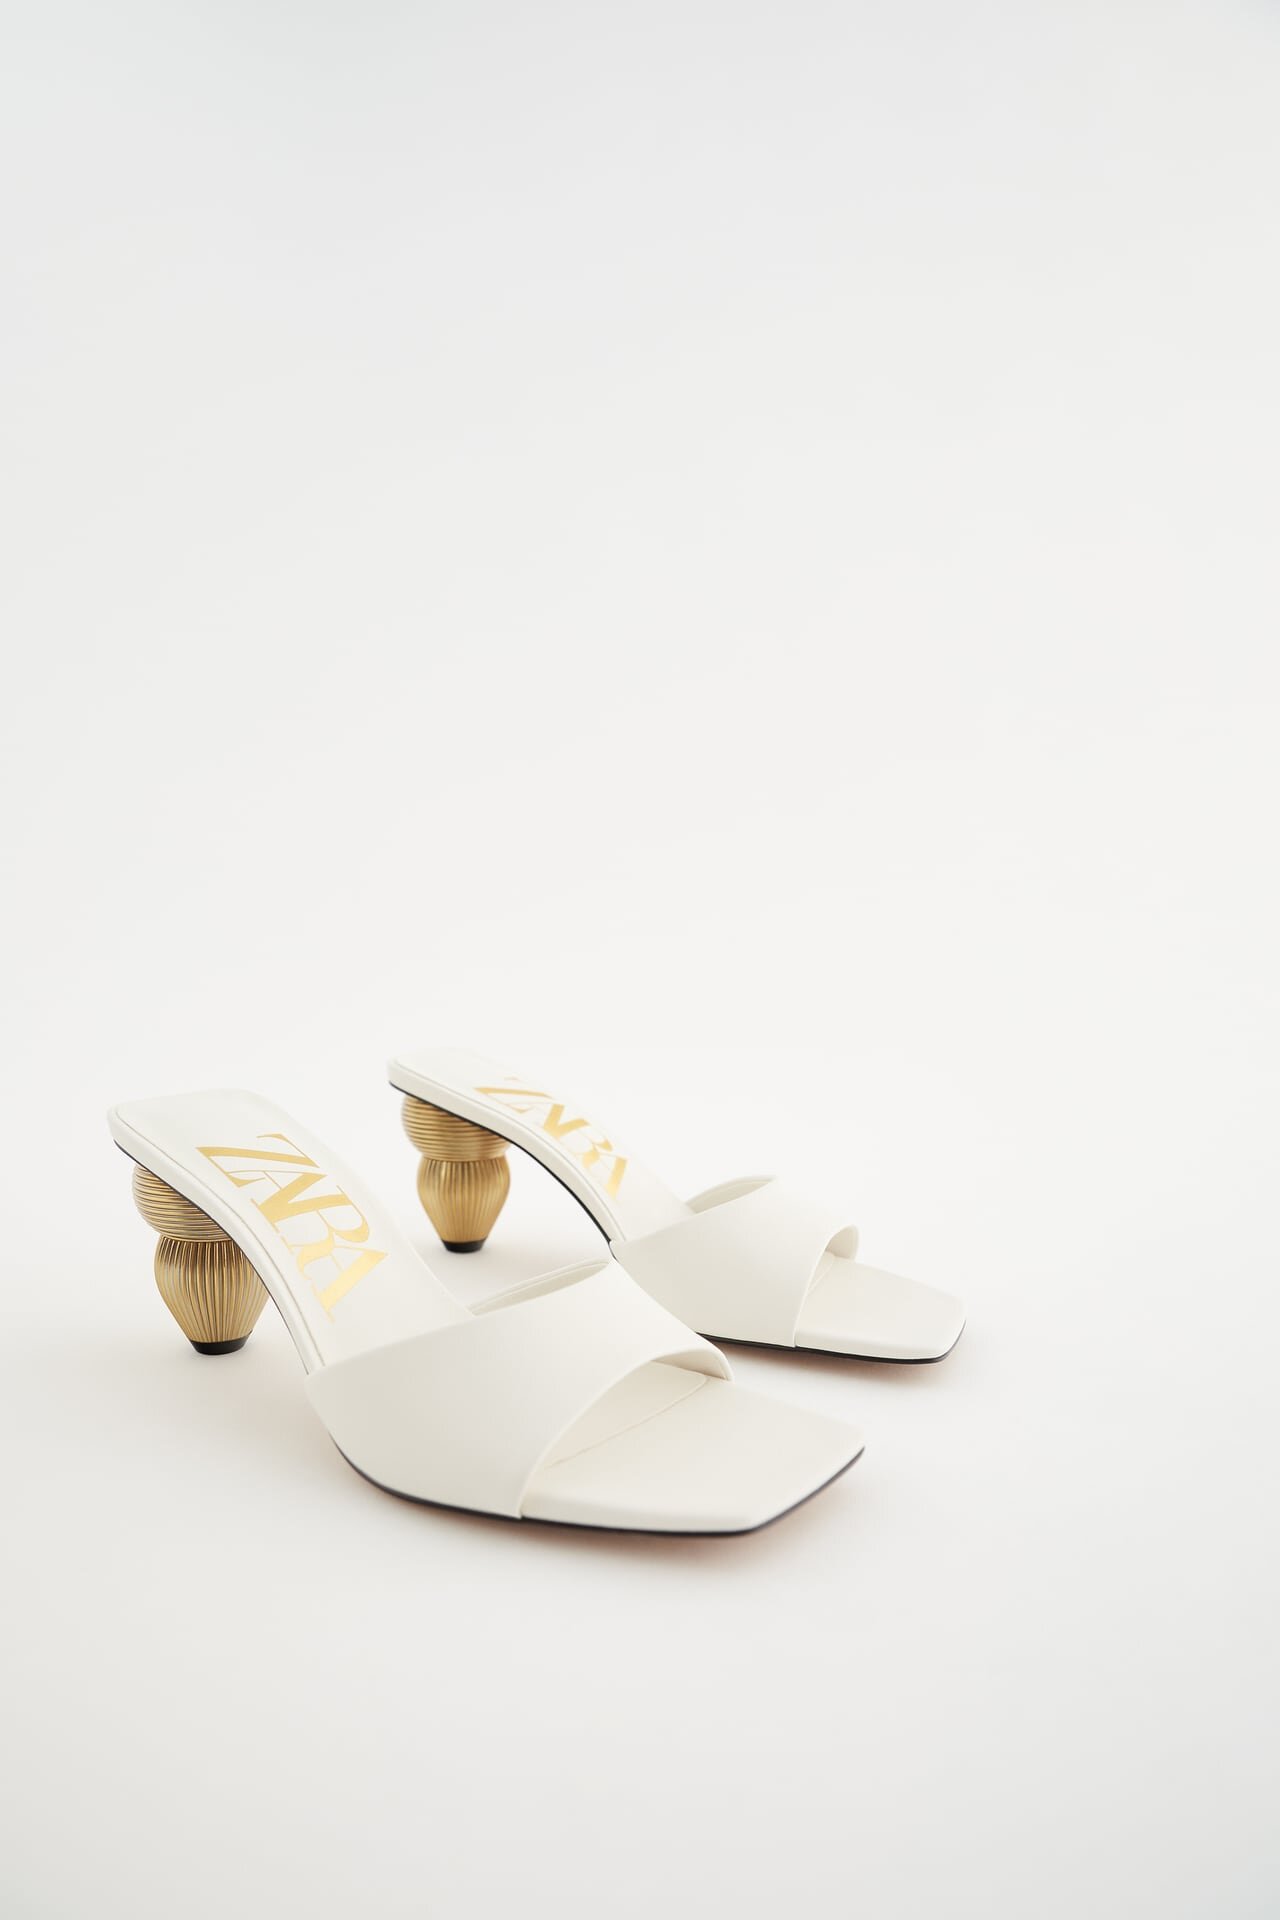 Zara gold heeled sandals.jpg